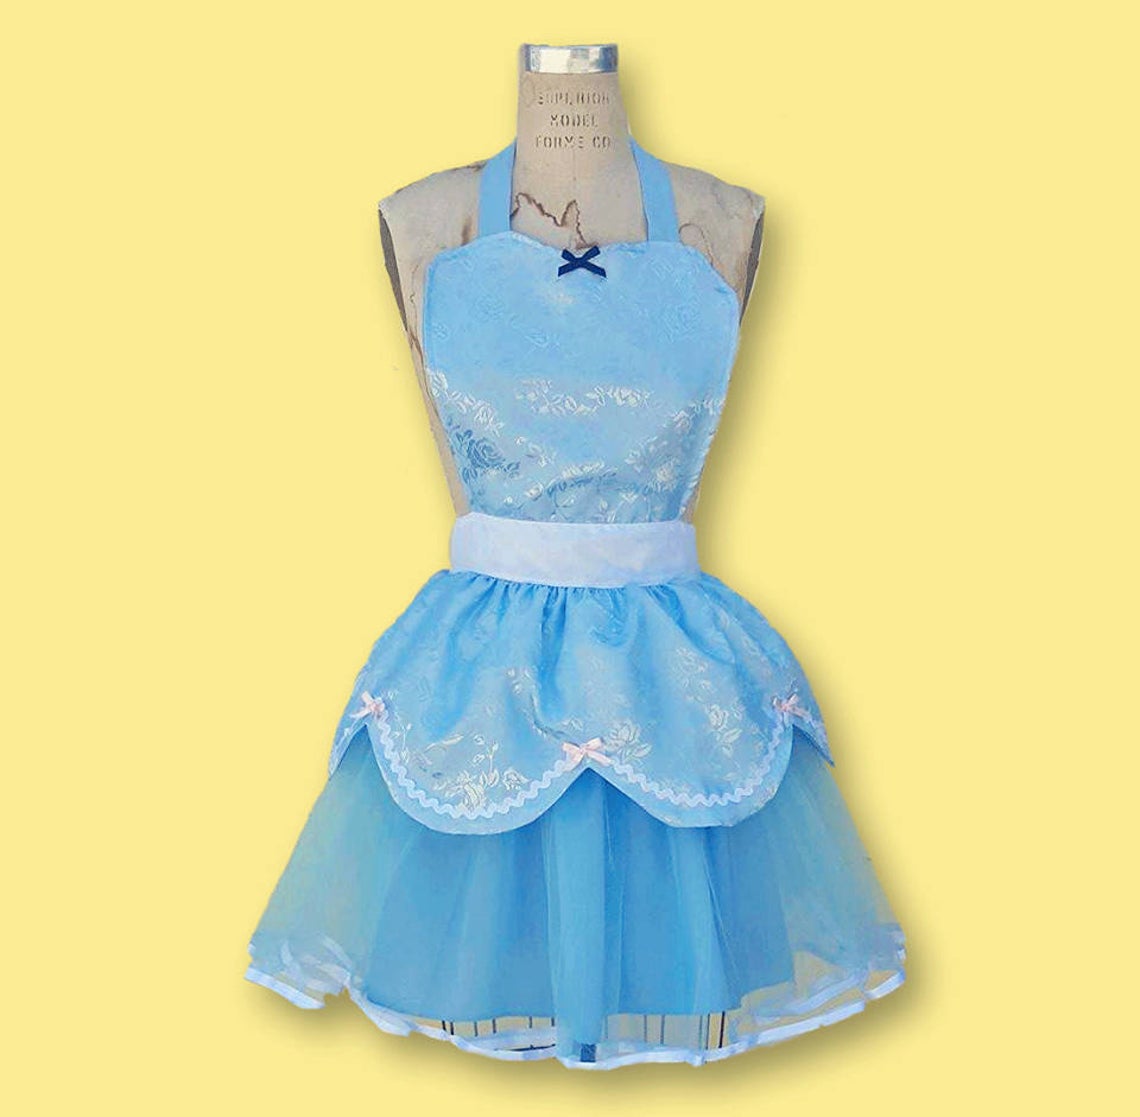 cinderella maid dress costume